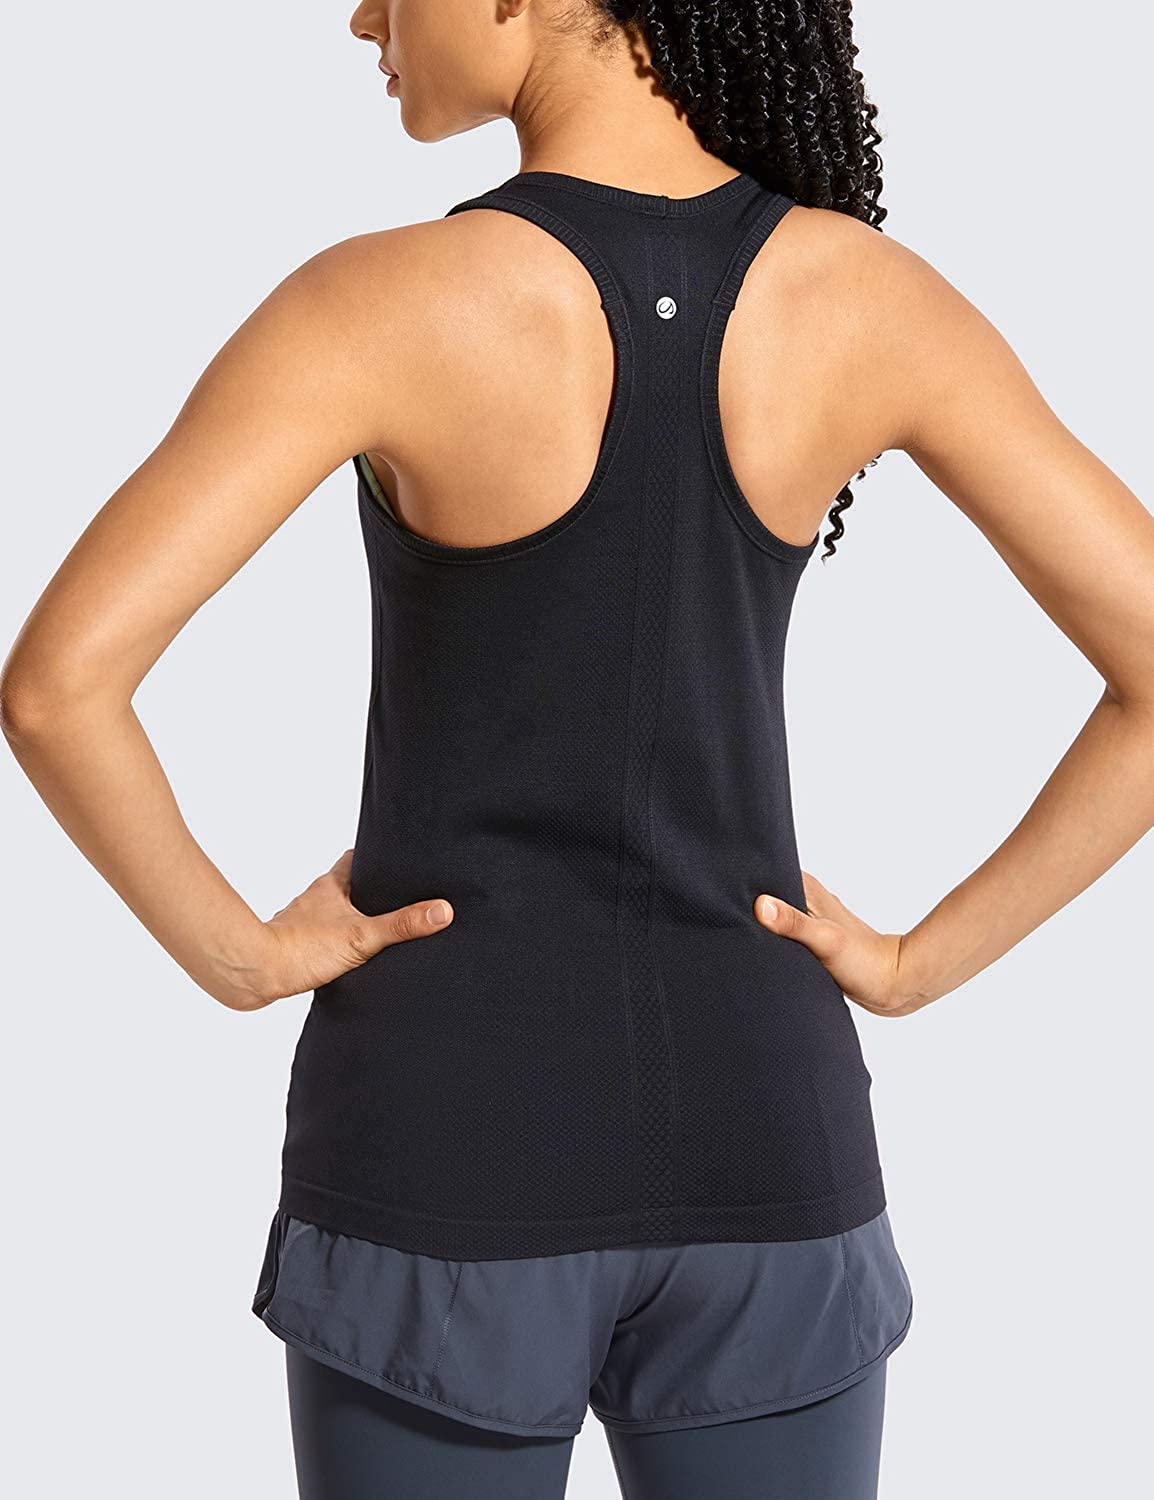  CRZ YOGA Seamless Workout Shirts for Women Short